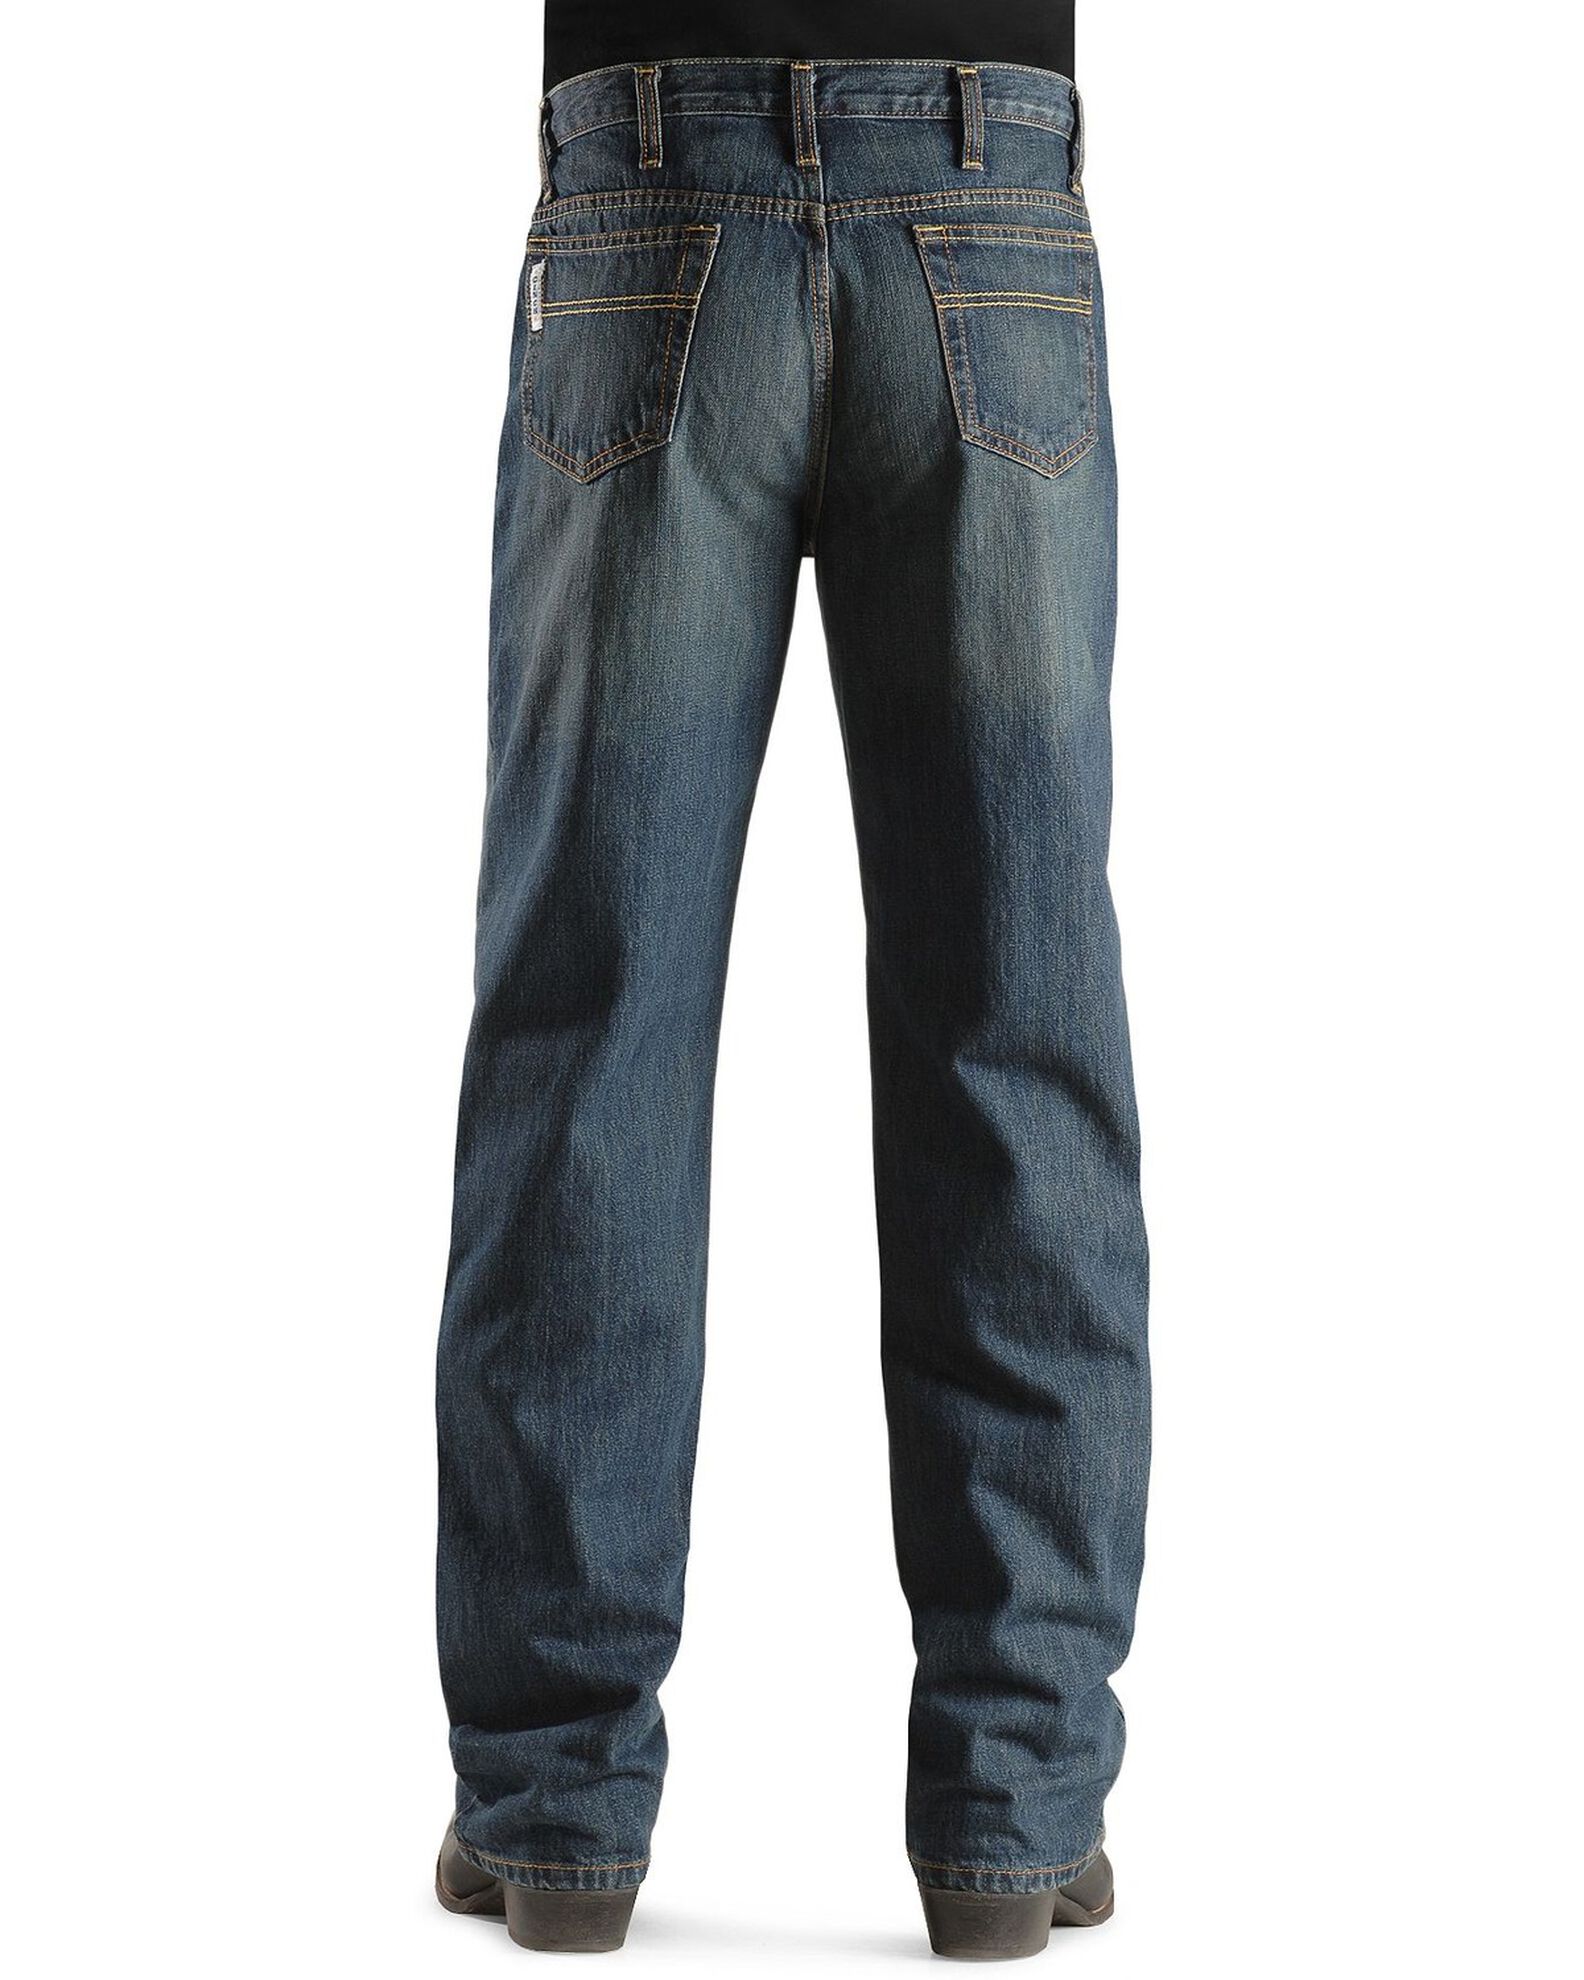 Cinch Jeans - White Label Relaxed Fit Denim Jeans Dark Stonewash